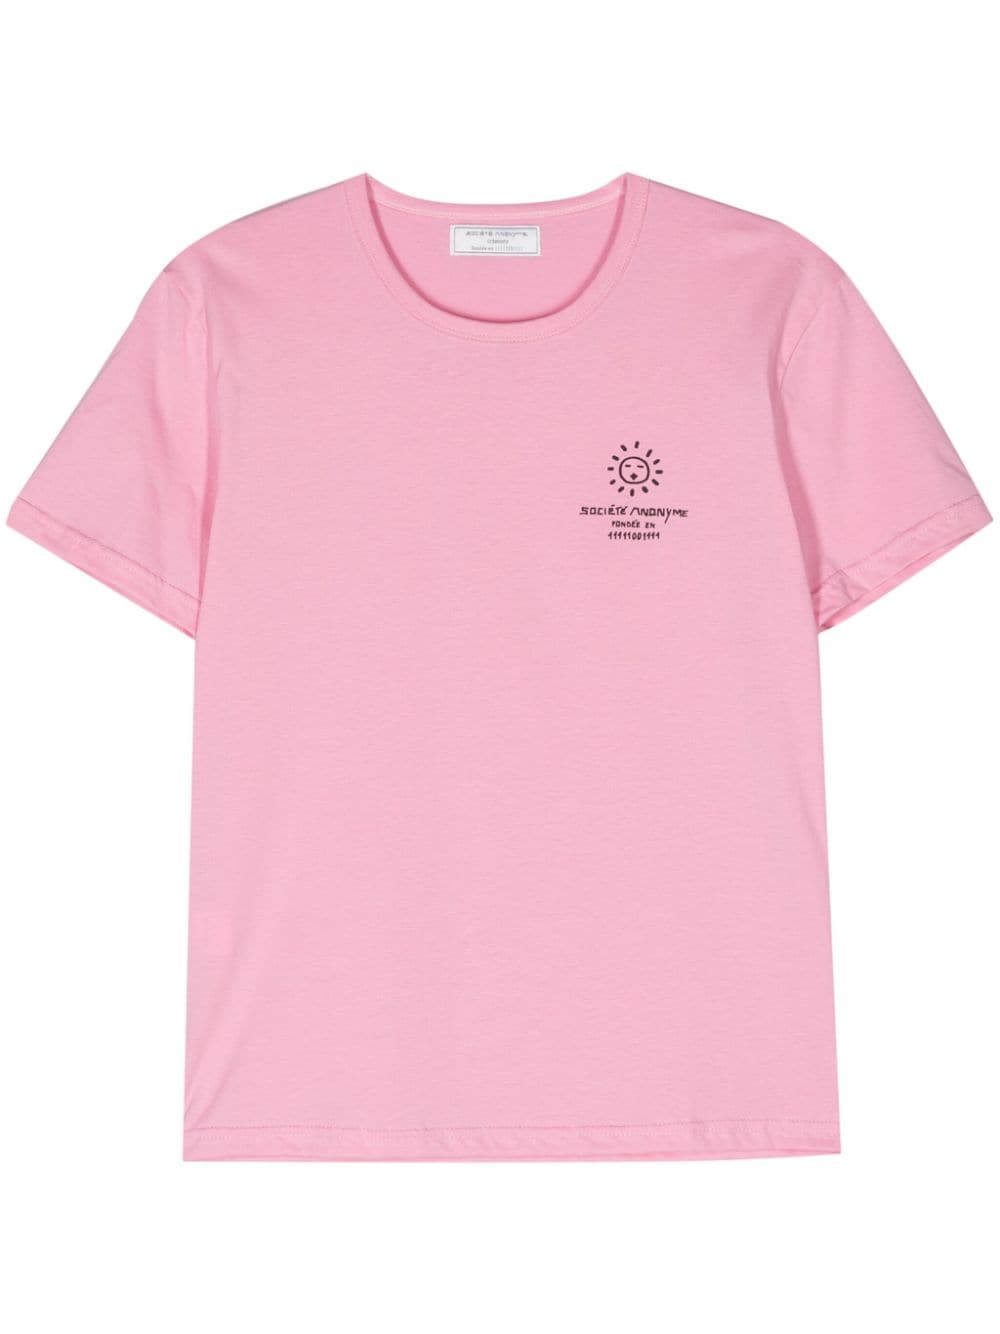 Société Anonyme Bas katoenen T-shirt Roze